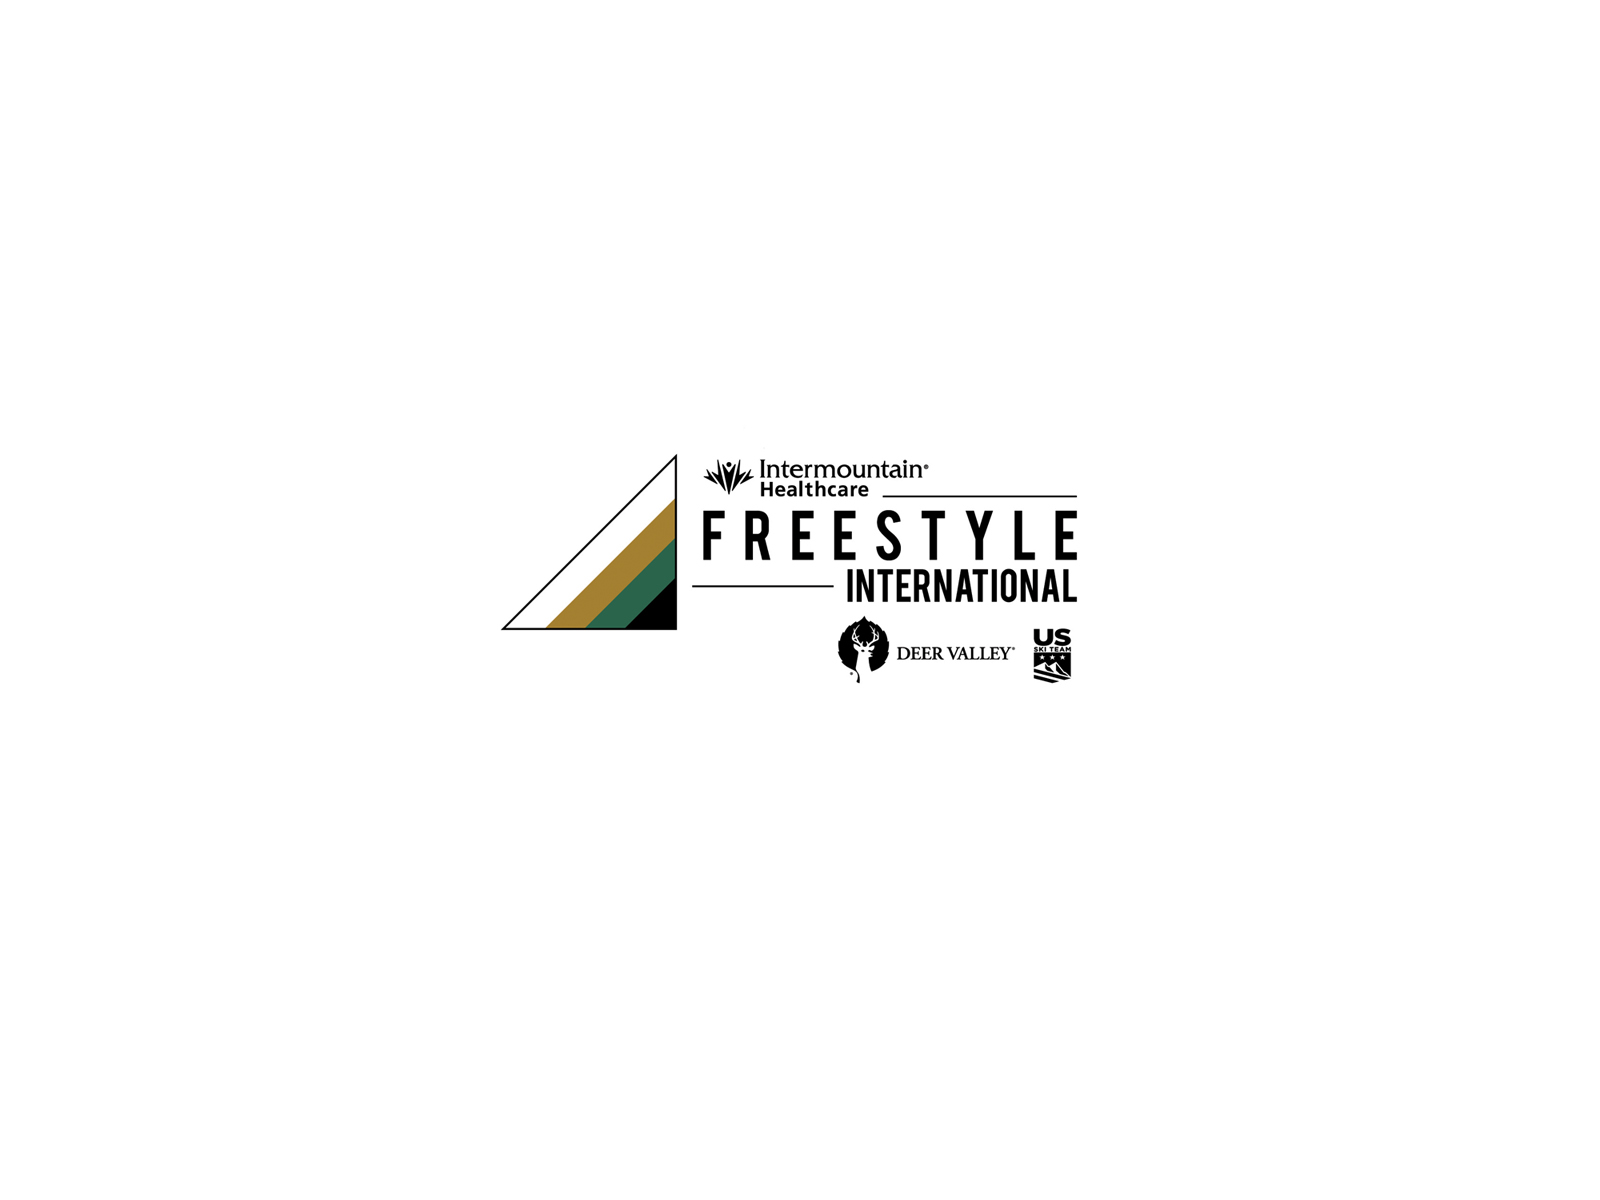 Intermountain Healthcare Freestyle International 